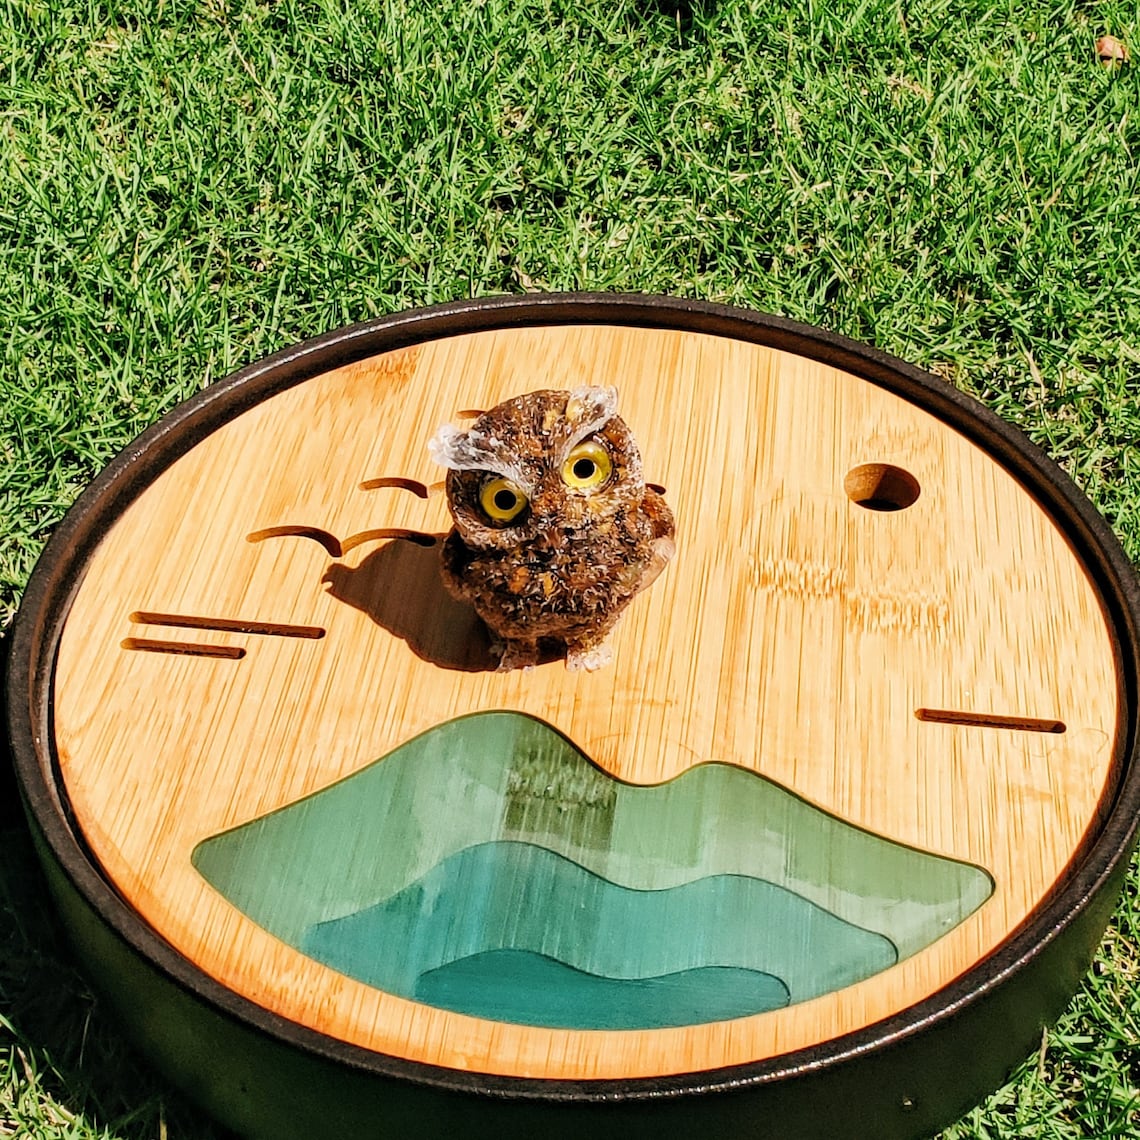 🔥Handmade Natural Crystal Gemstone Owl - Ready to Ship